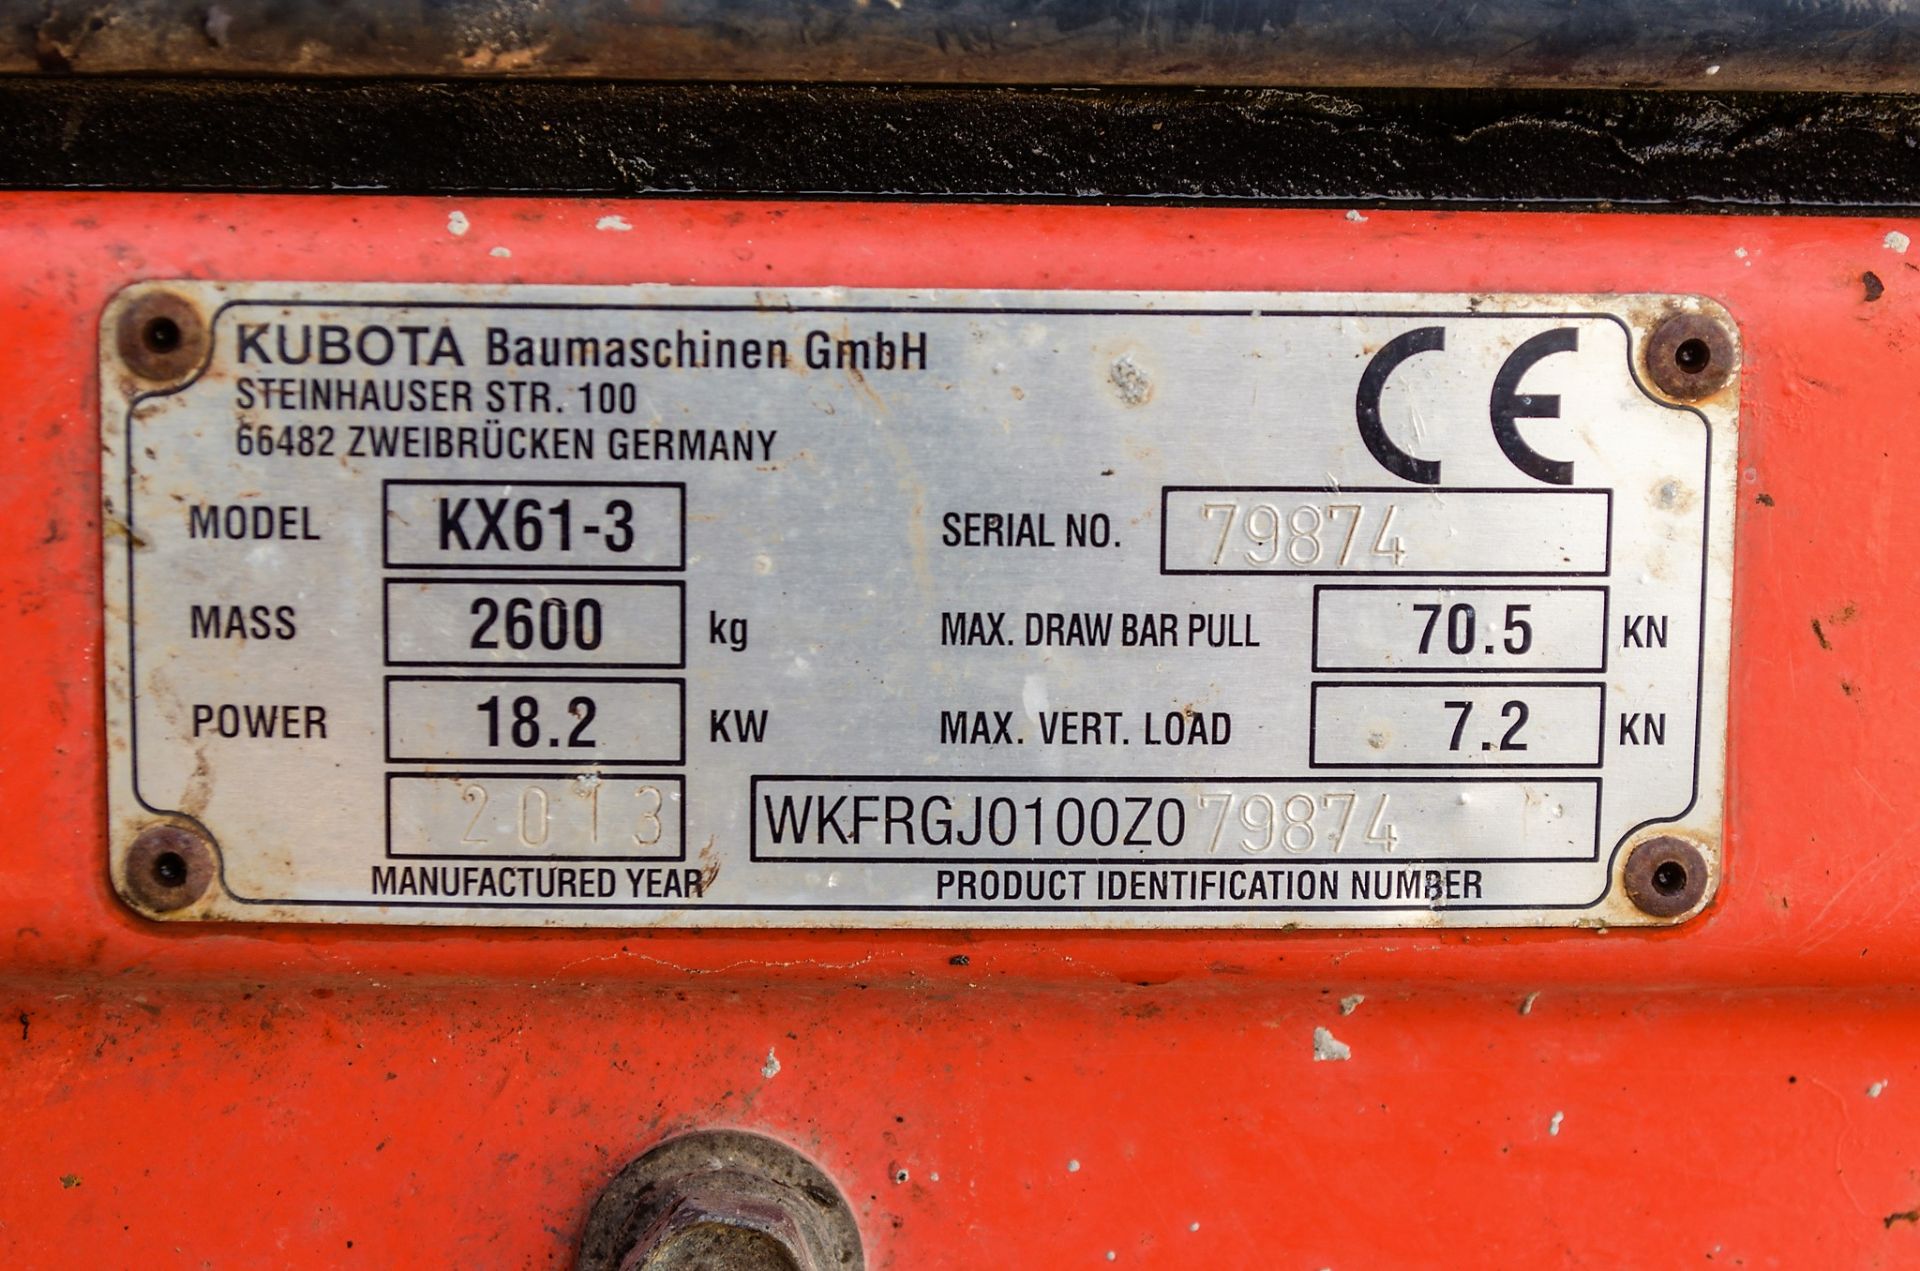 Kubota KX 61-3 2.8 tonne rubber tracked mini excavator  Year: 2013 S/N: 79874  Recorded Hours: - Image 19 of 19